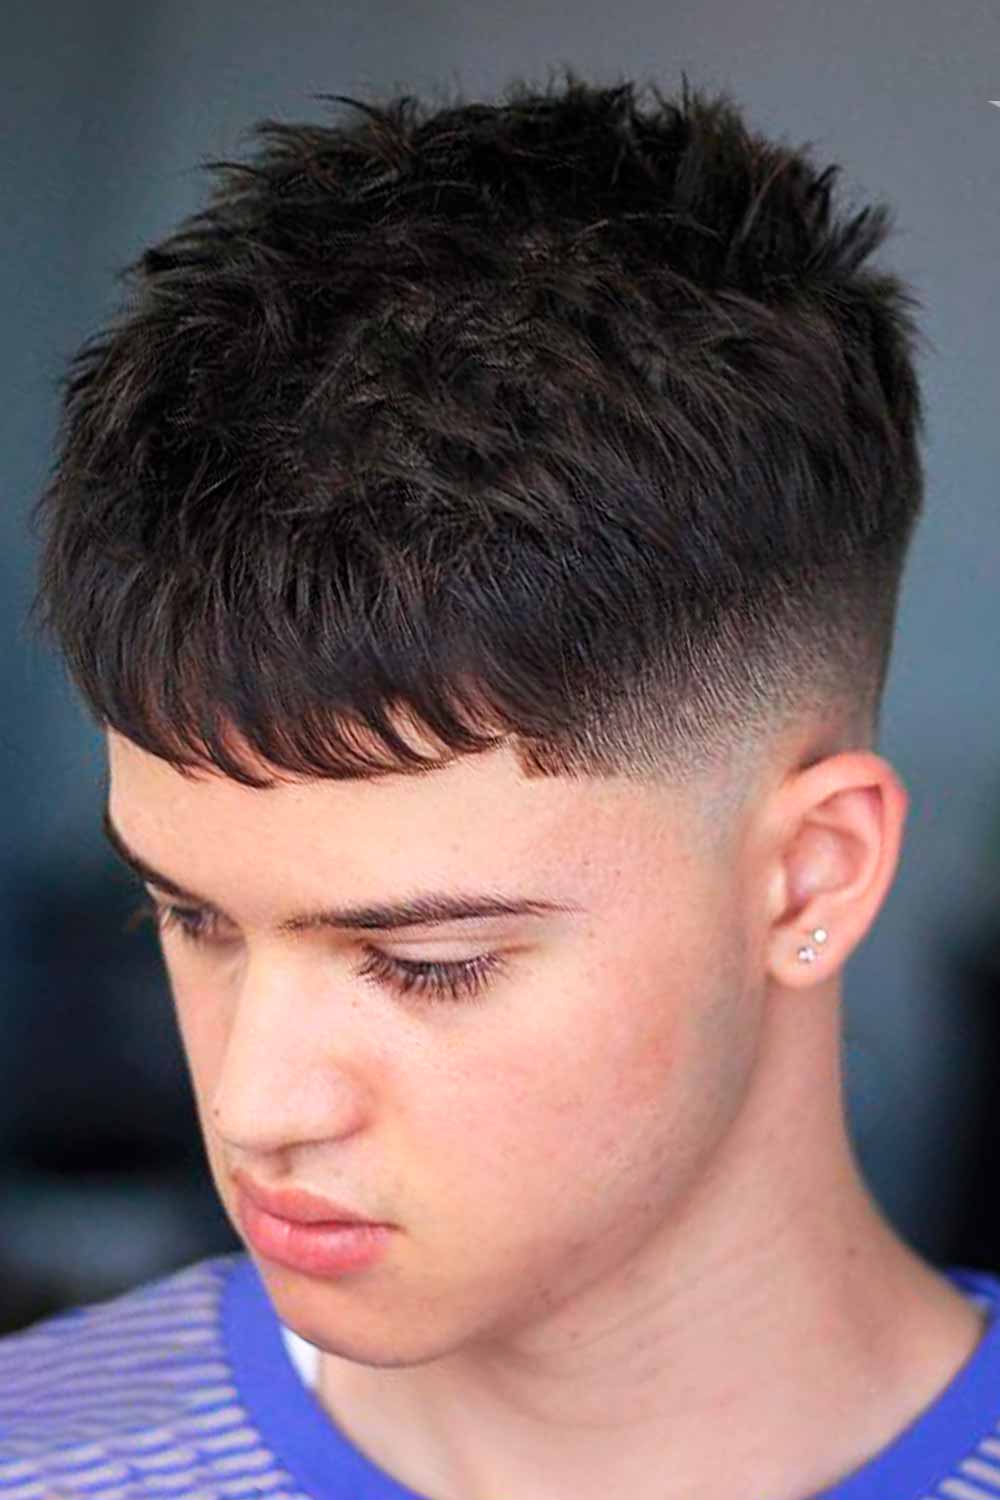 Messy Crop #boyshaircuts #boyshairstyles #haircutsforboys #hairstylesforboys